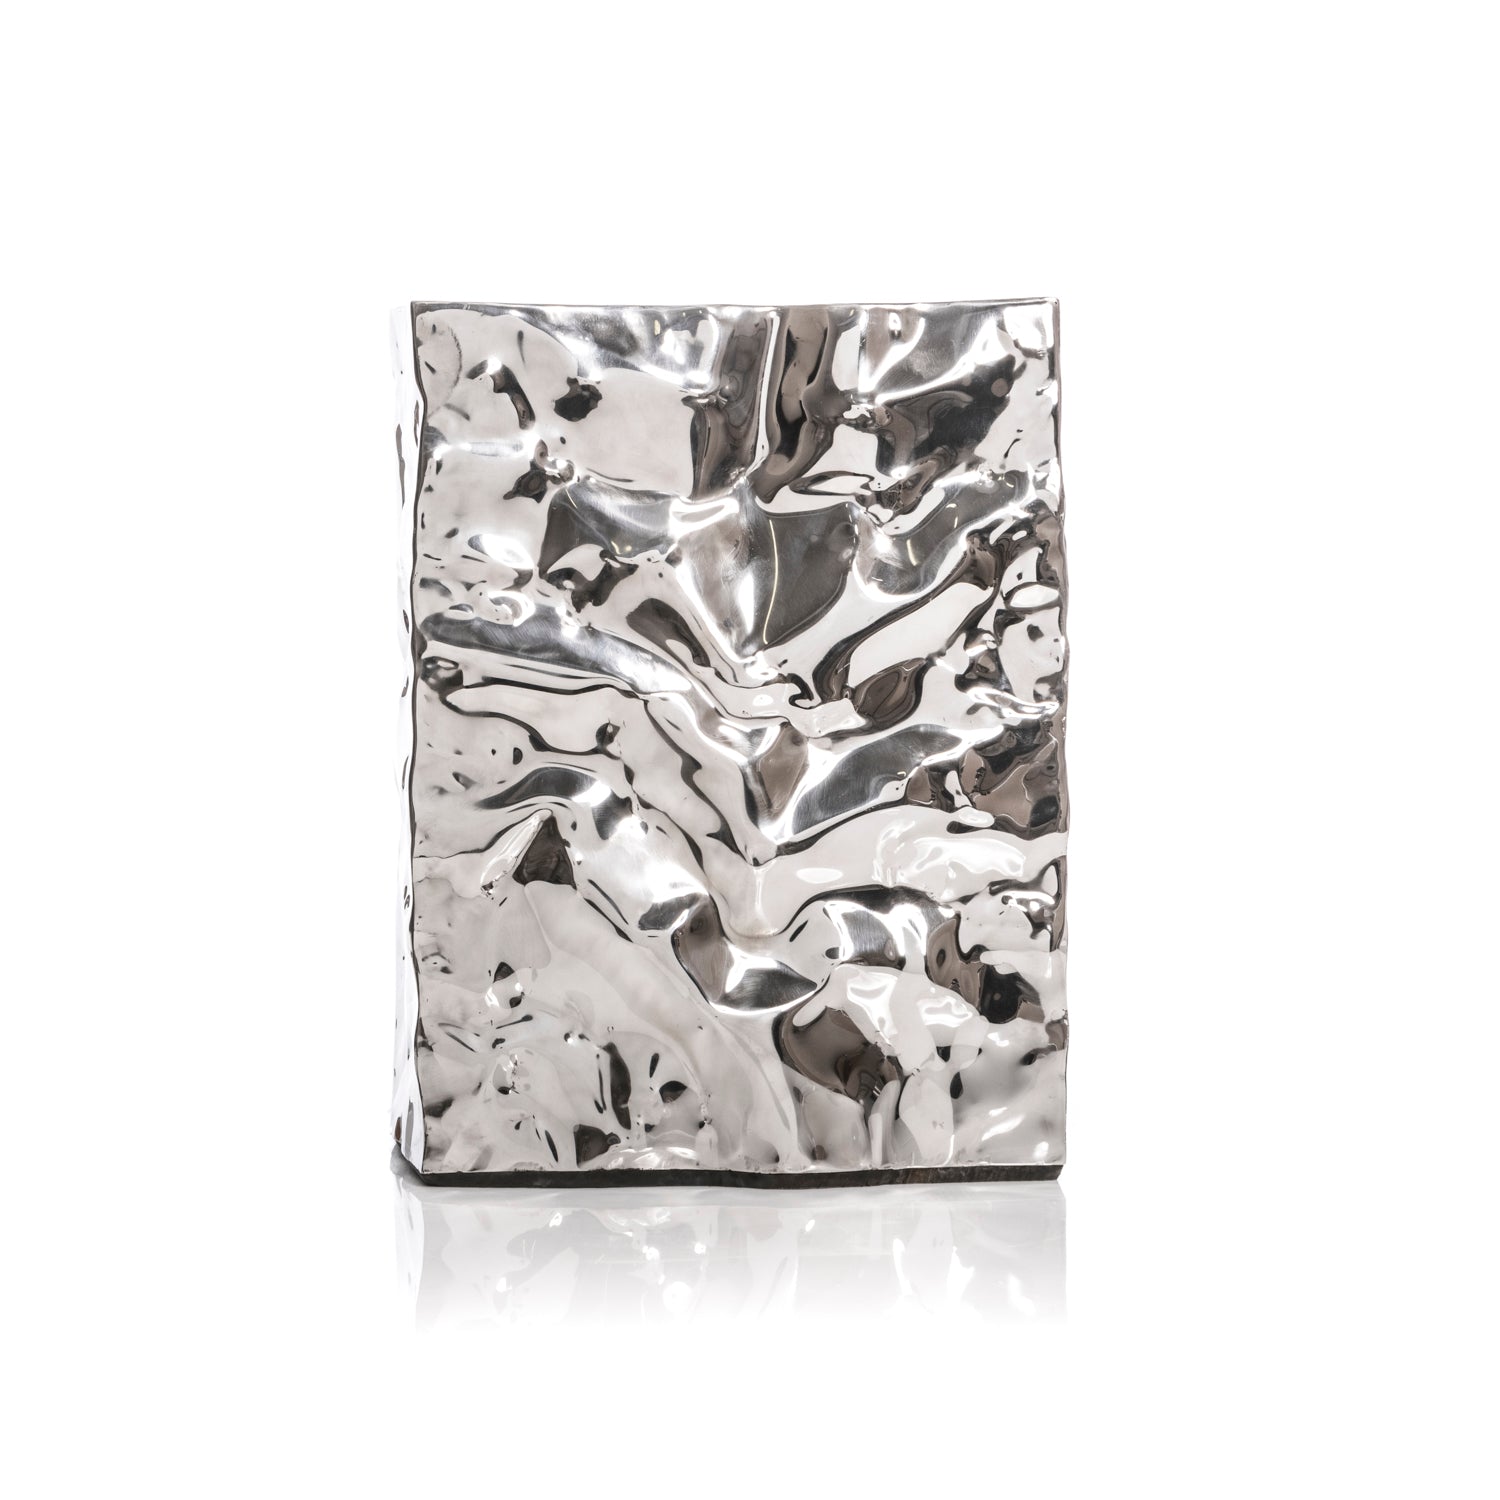 Steel Cube - Struttura a cubo in acciaio - Asmat Design